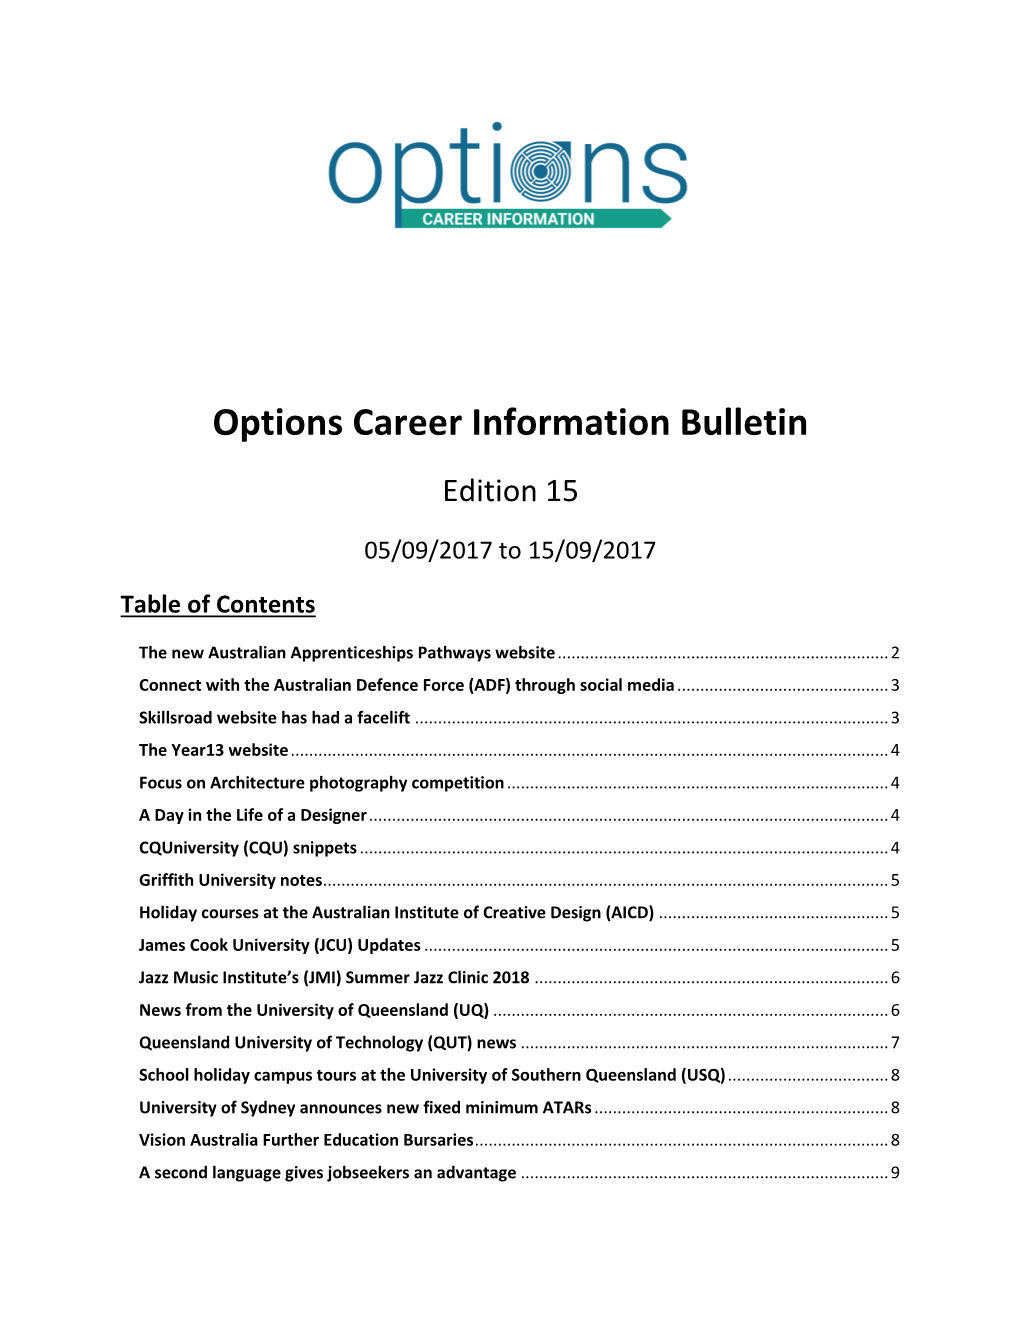 Options Career Information Bulletin Edition 15